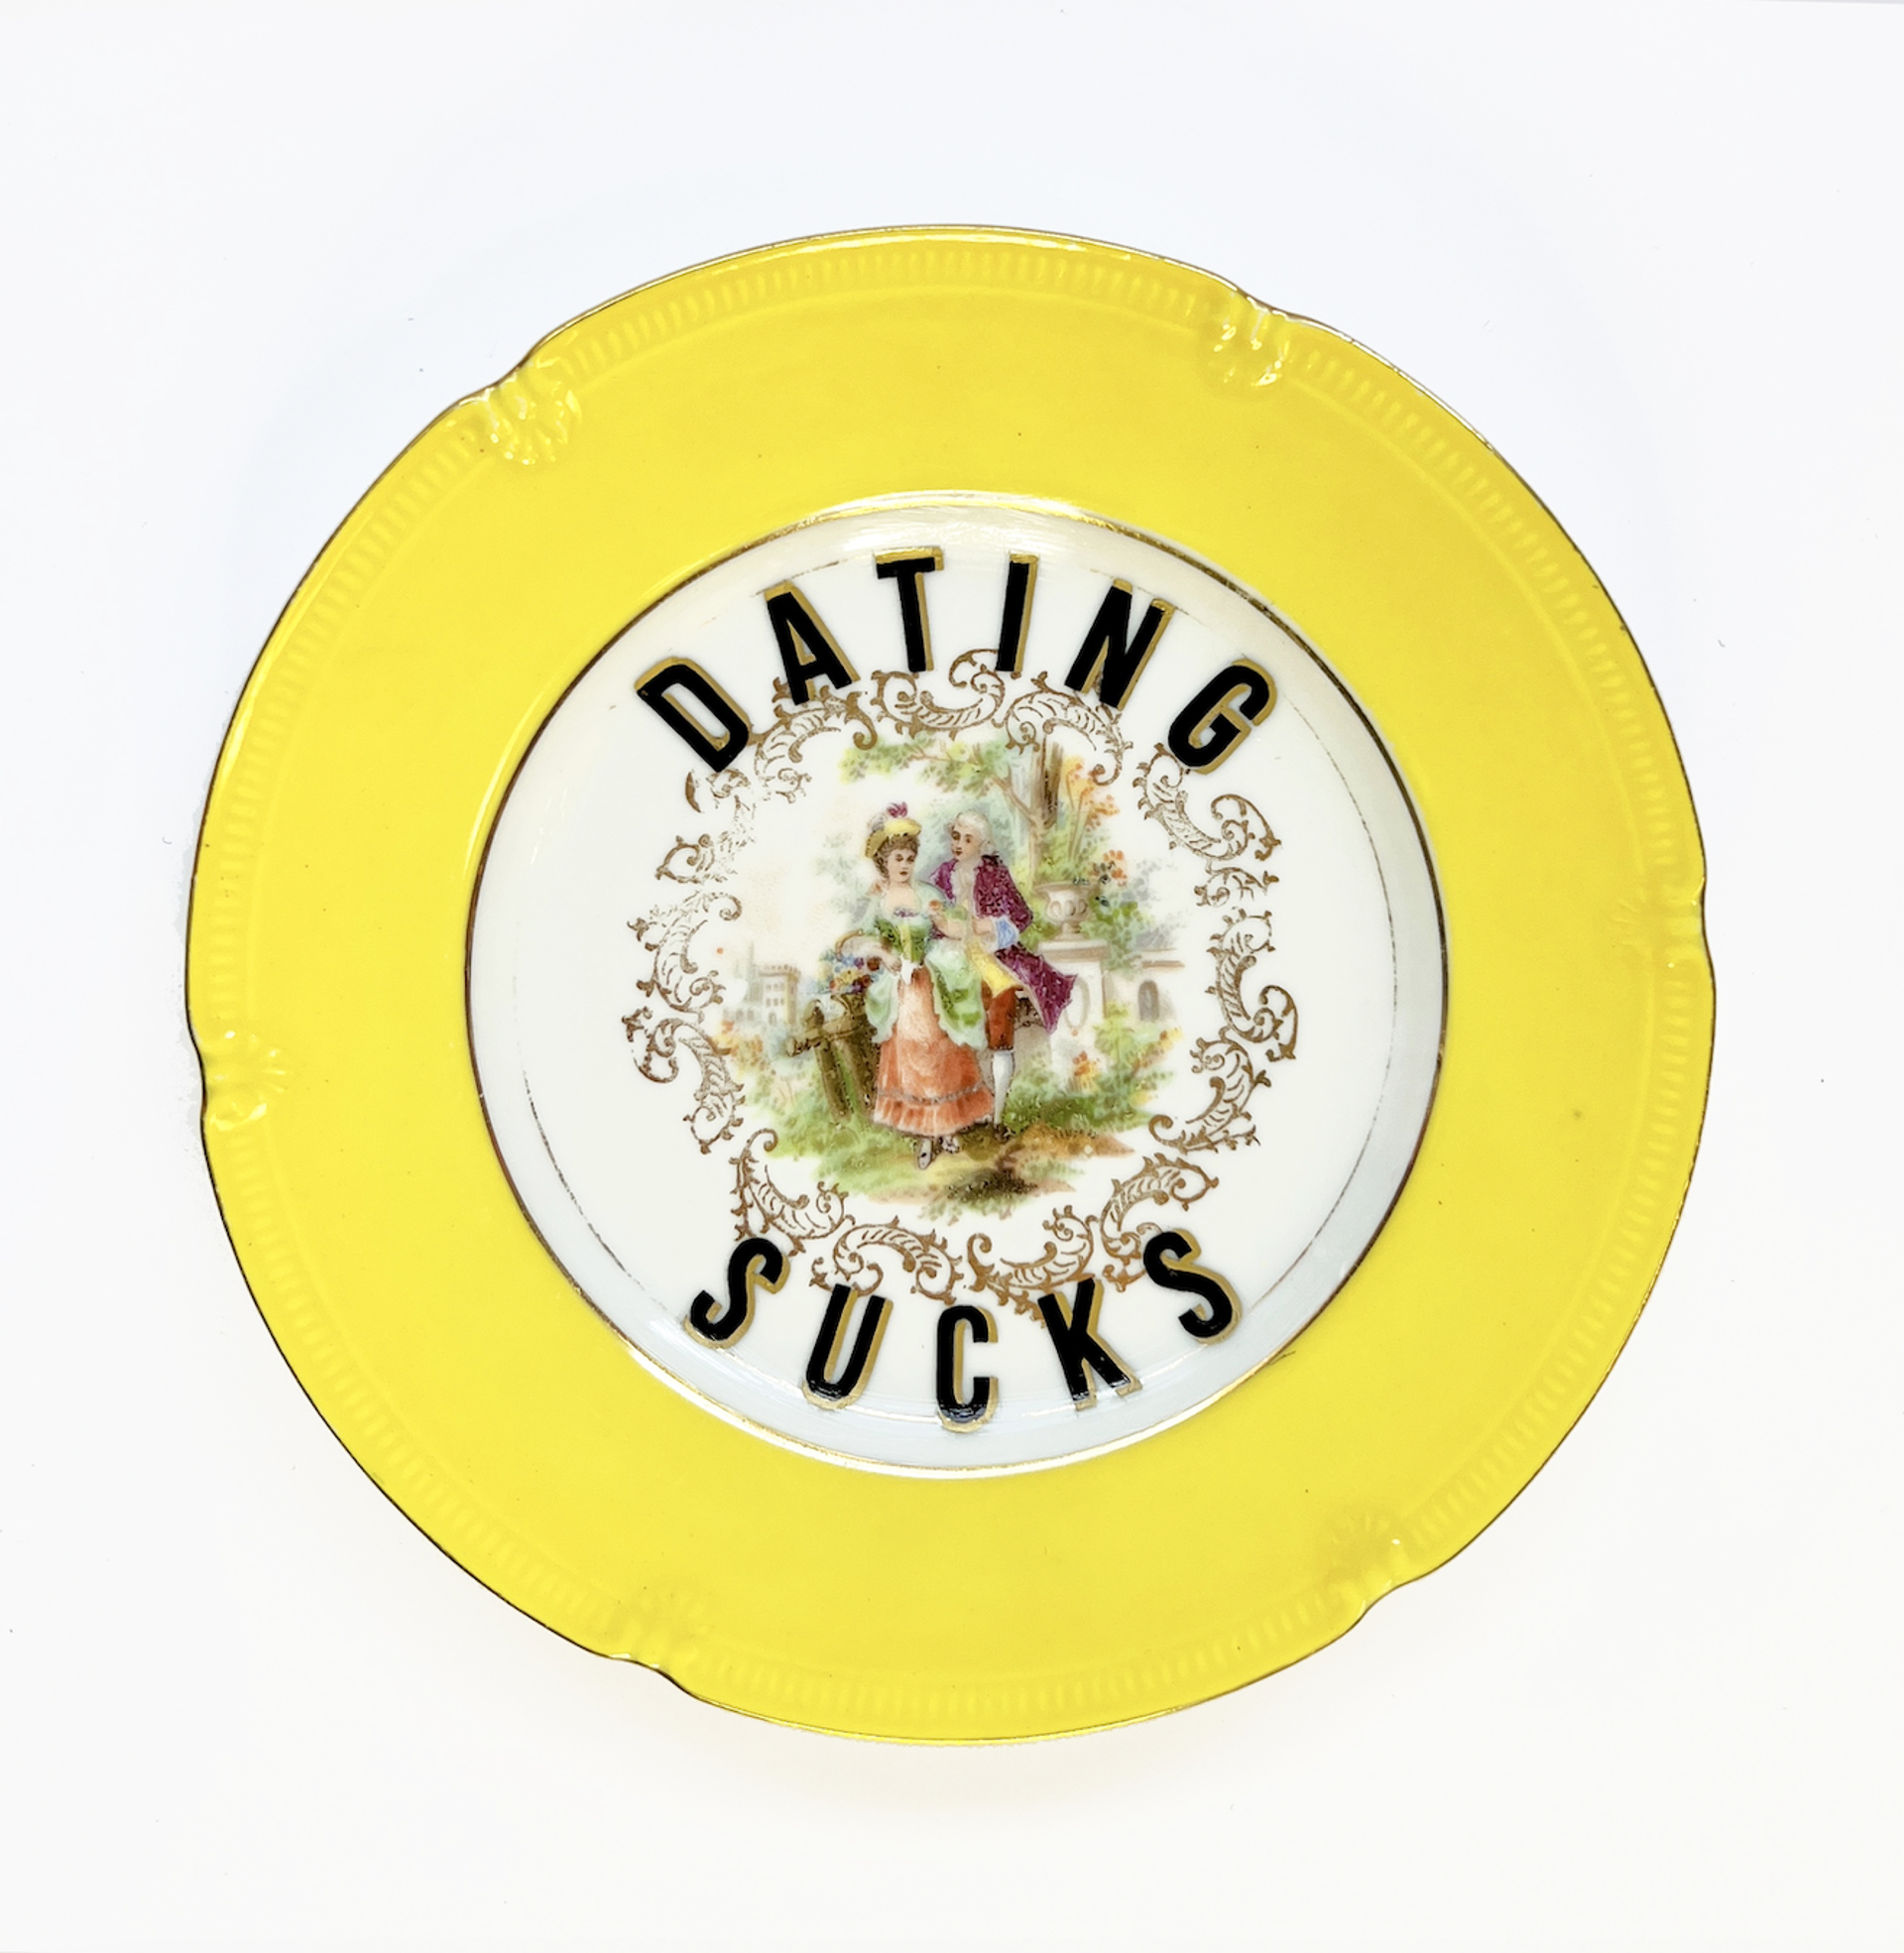 Dating Sucks (dessert plate) by Marie-Claude Marquis